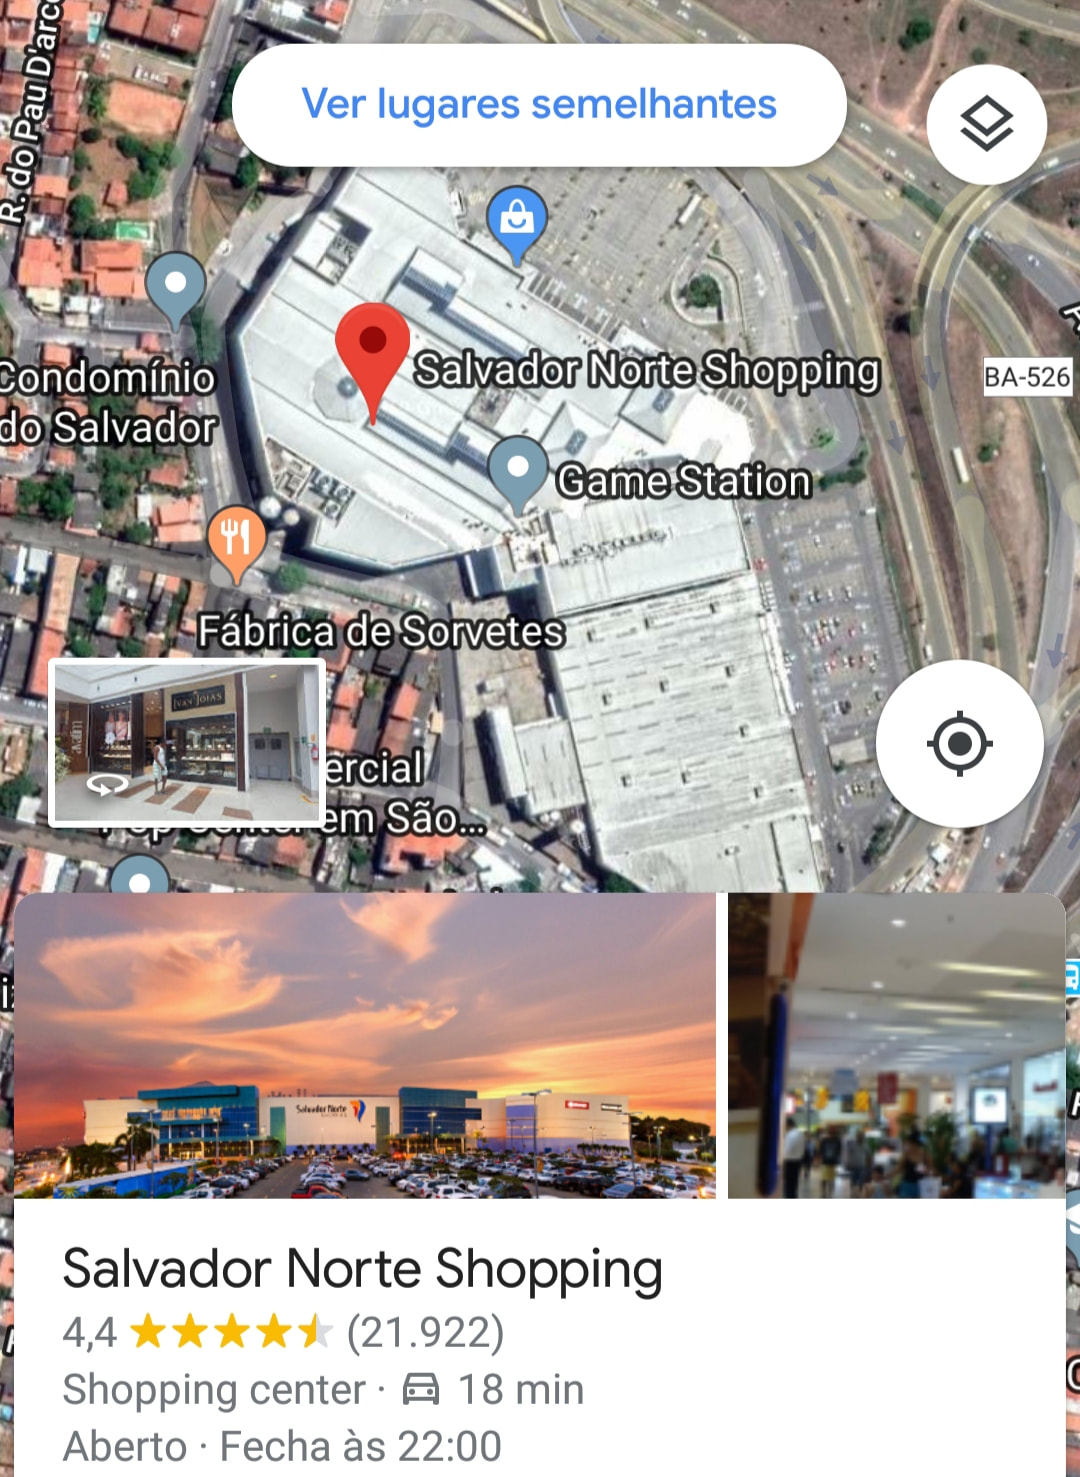 Game Station - Salvador Norte Shopping